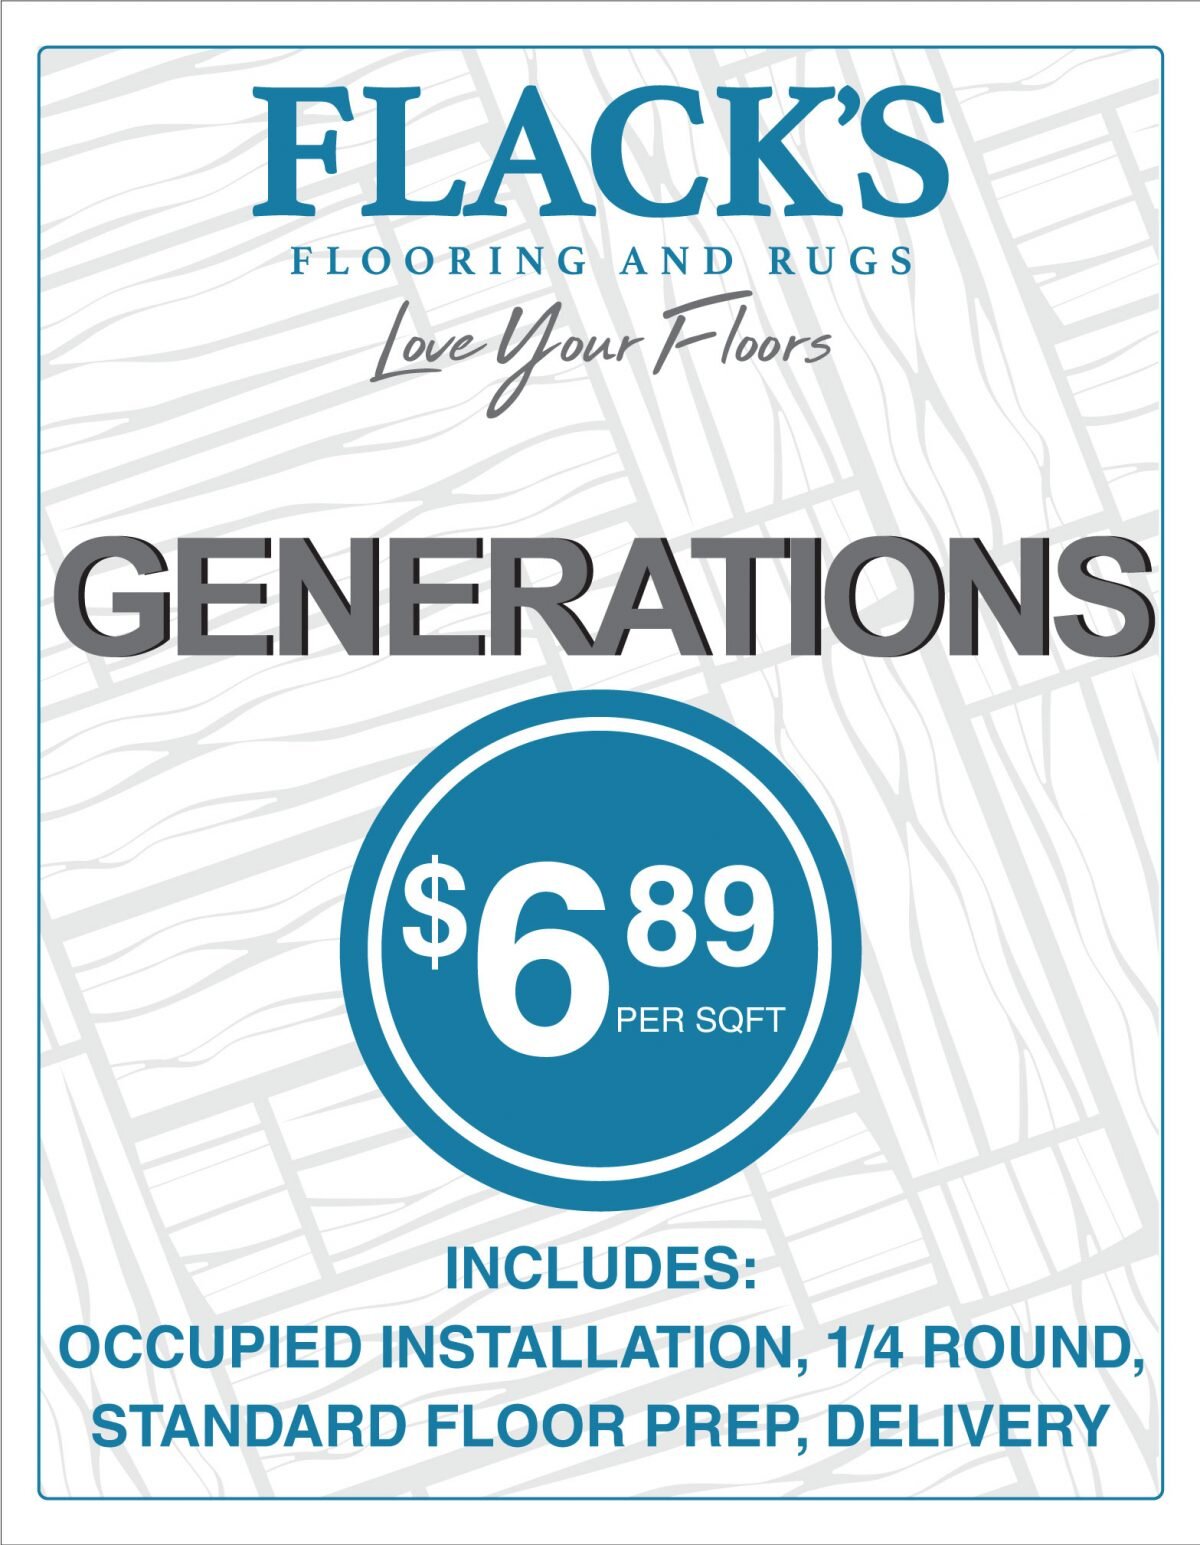 55764-Flacks-Flooring-Co.-Generations-1200x1545.jpg